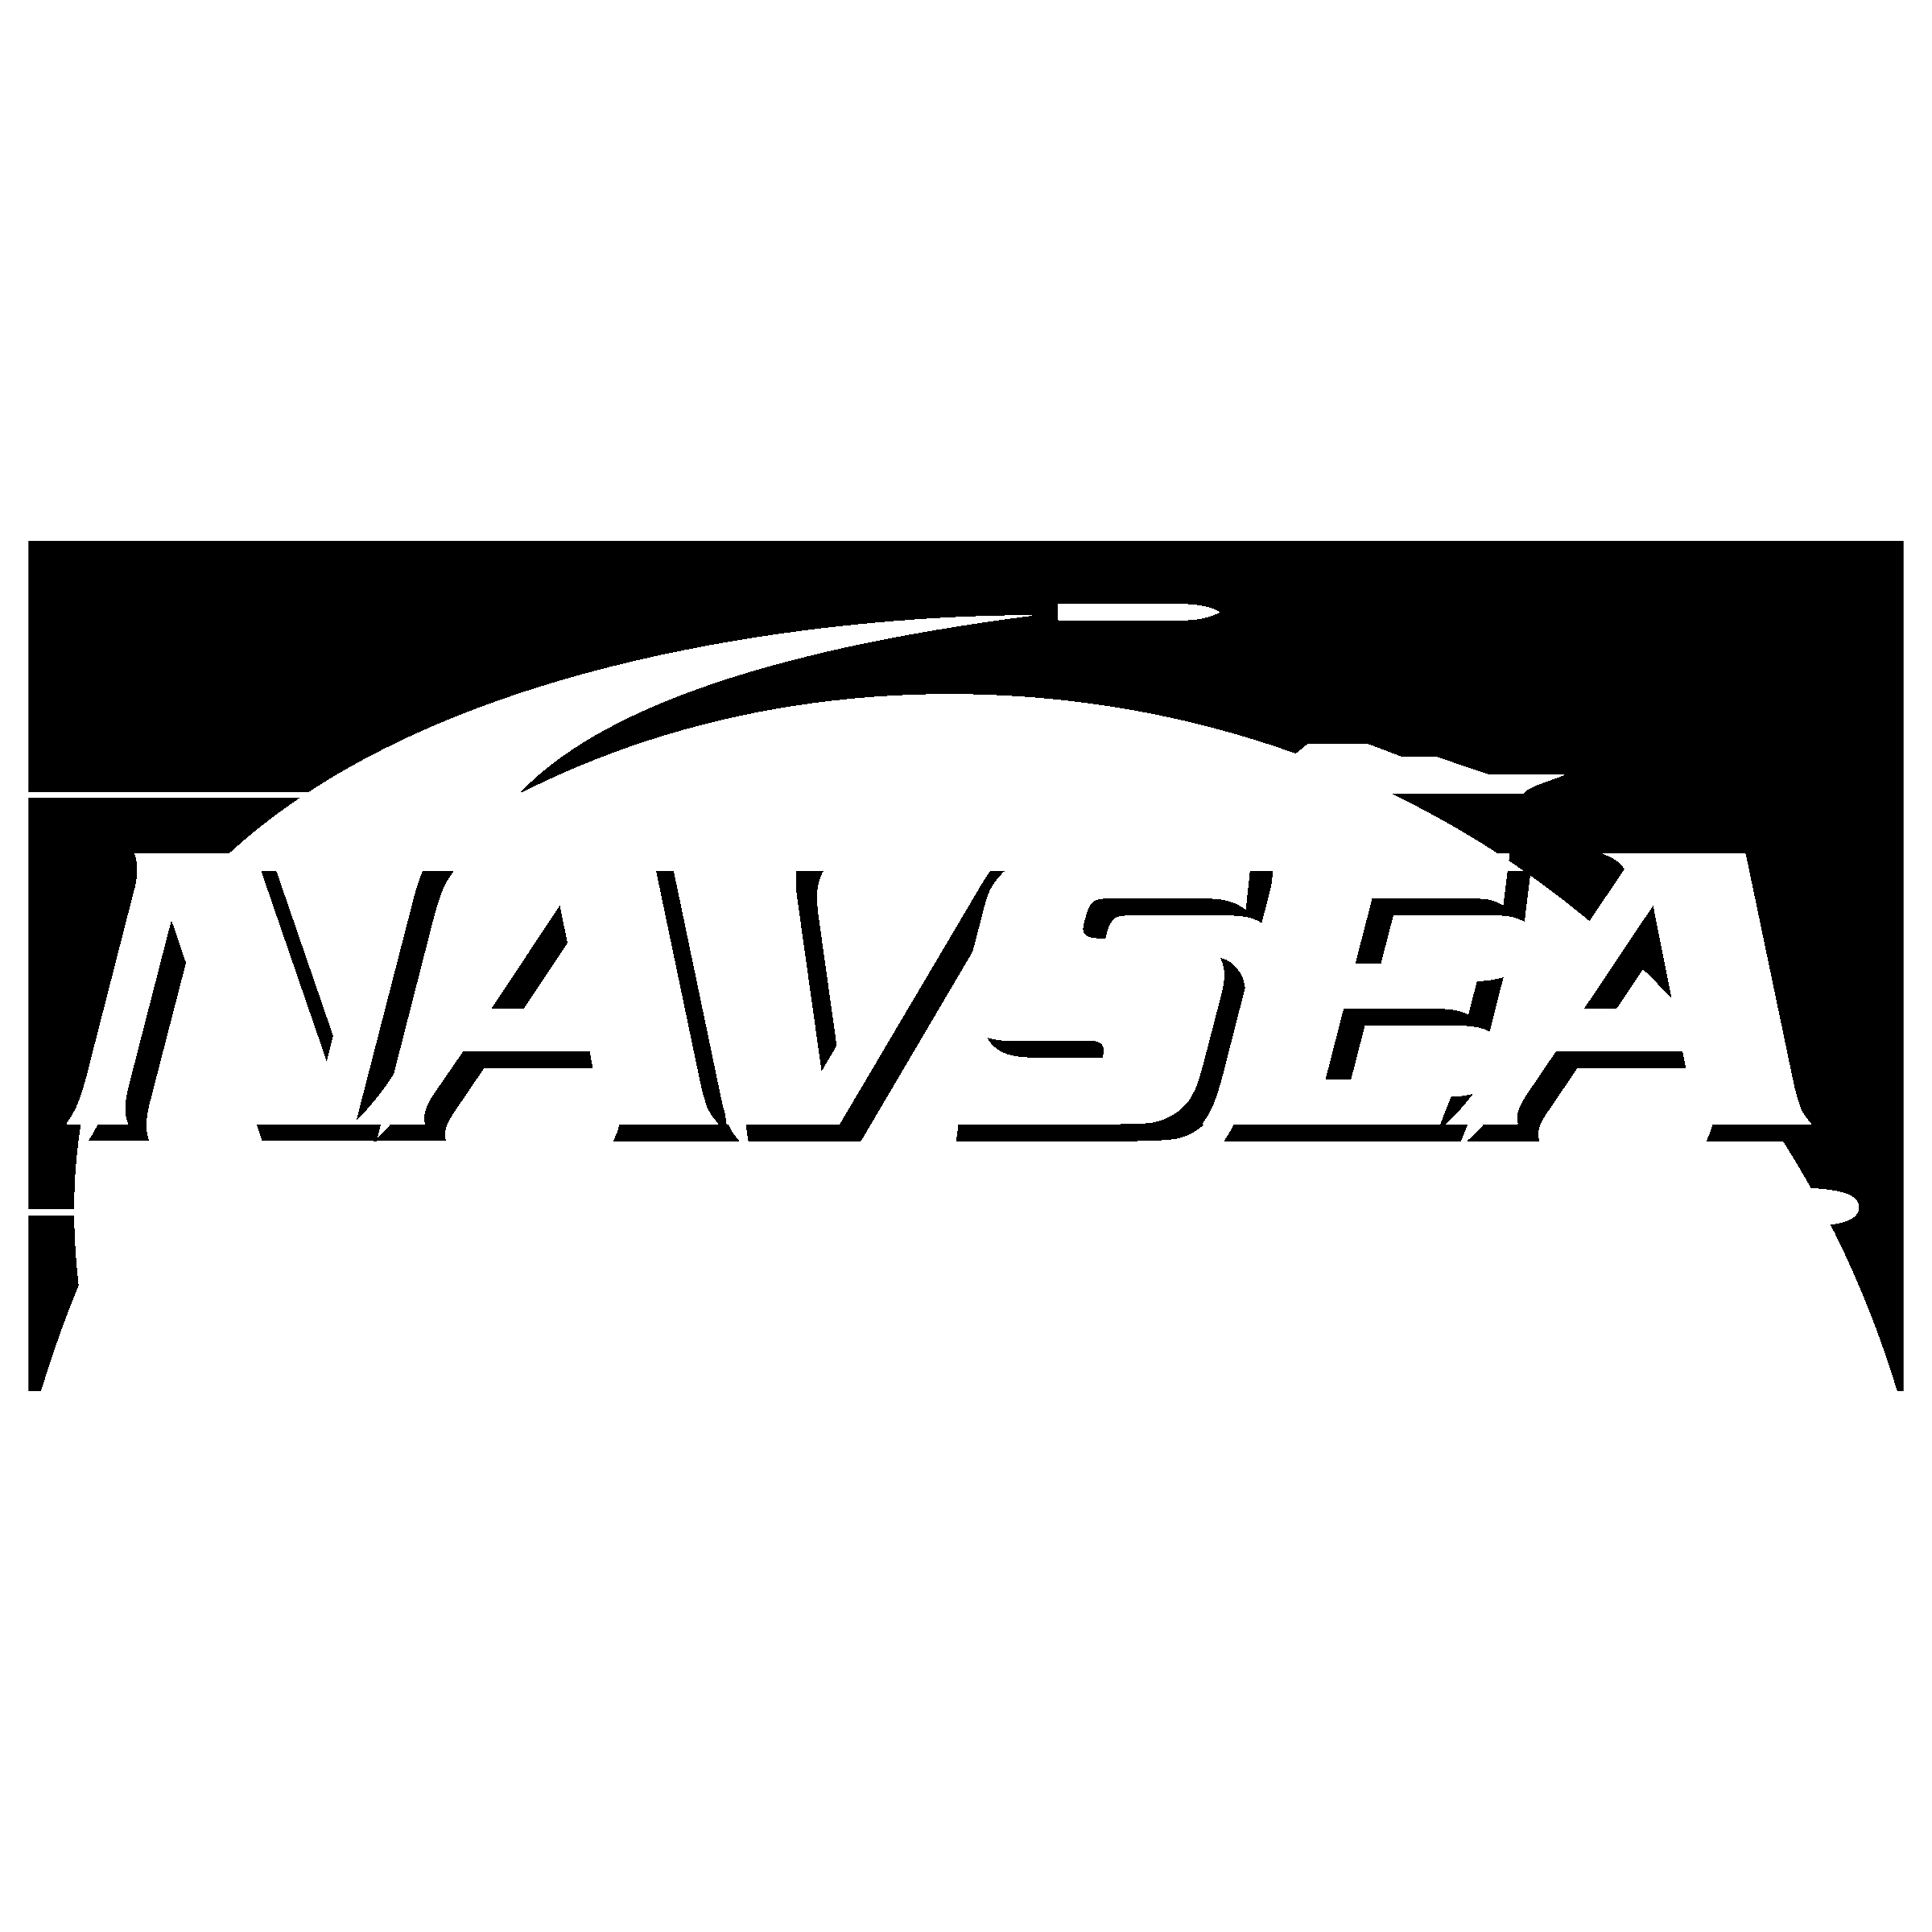 NAVSEA Logo - Navsea Logo PNG Transparent & SVG Vector - Freebie Supply